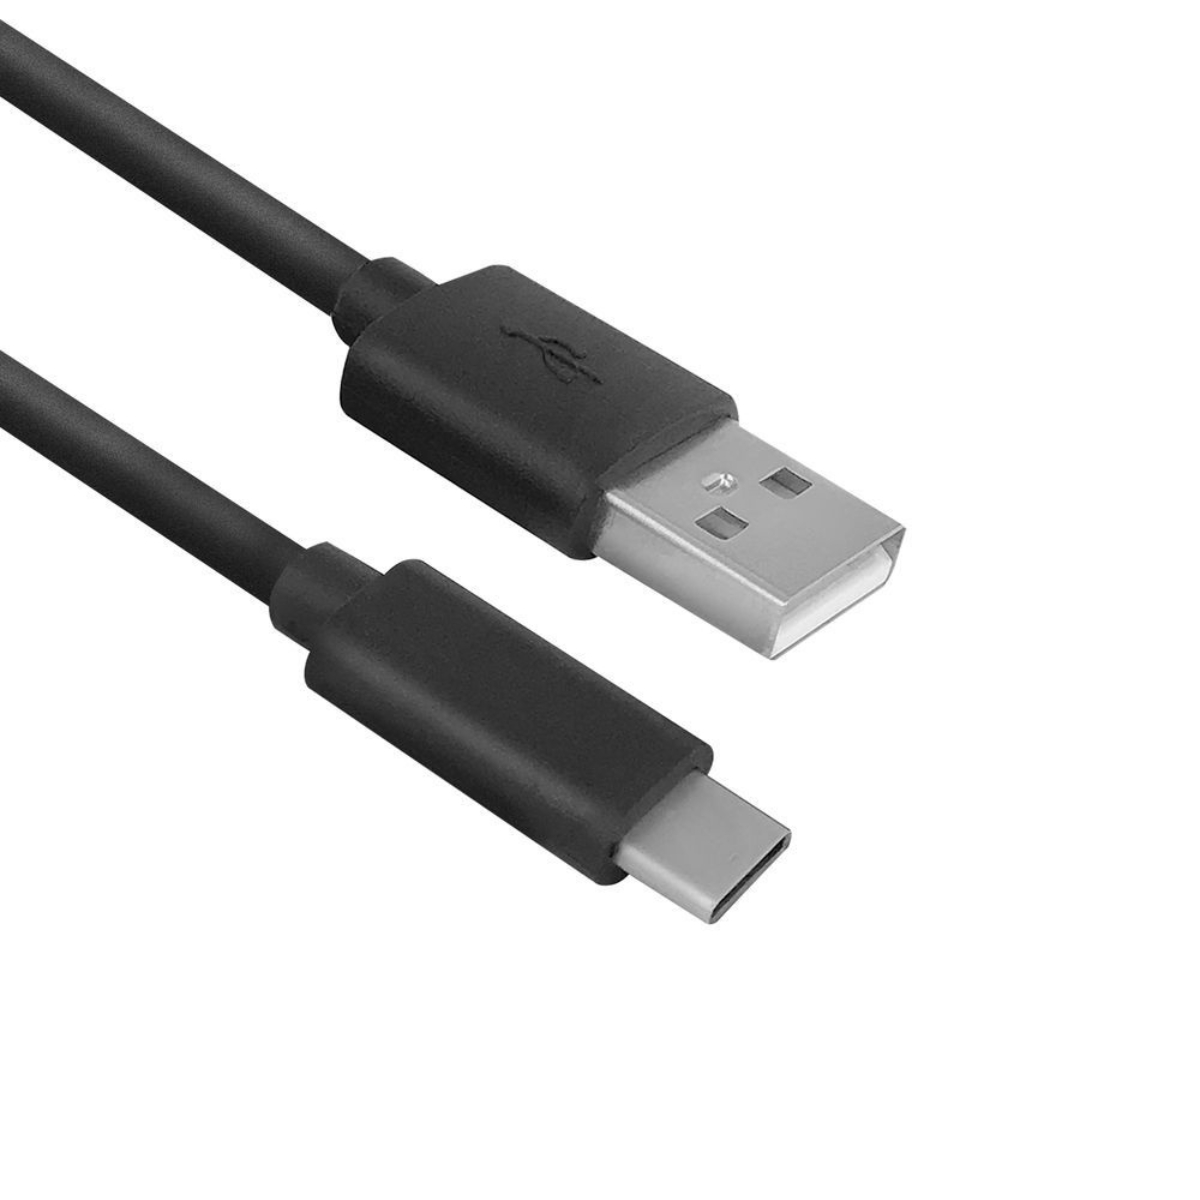 2.0 USB Meter ACT Kabel - USB-C Kabel Stecker/USB-A 1 AC7350 Stecker USB-C